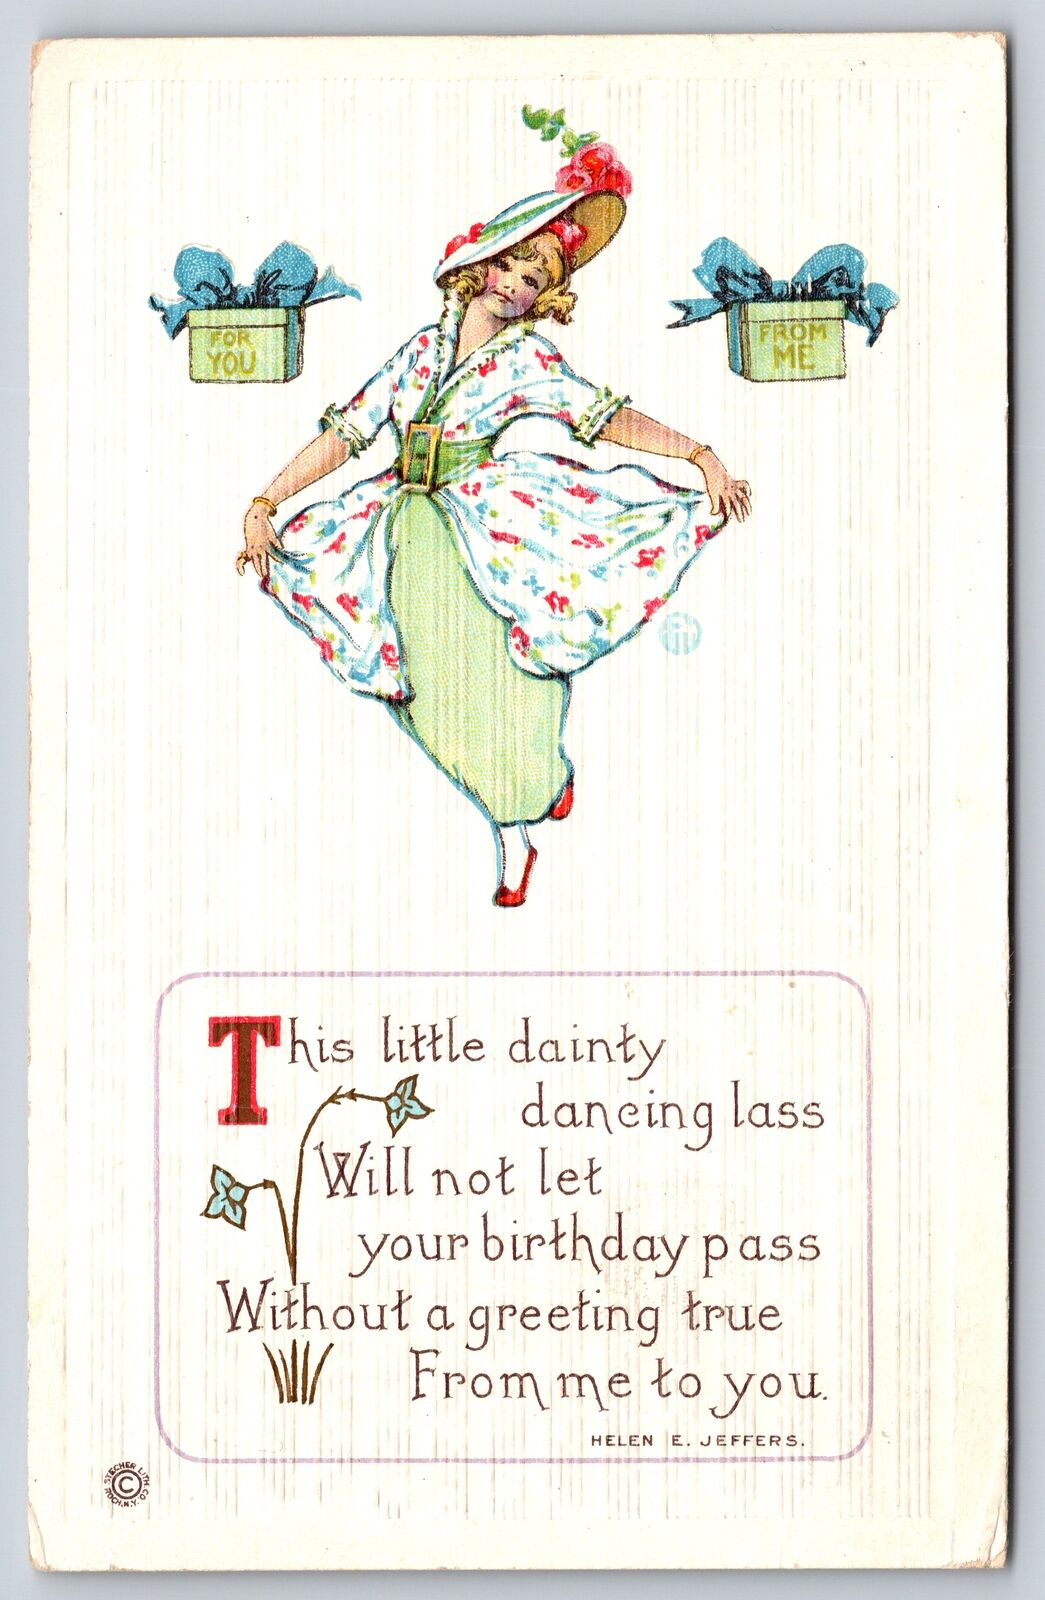 Birthday Greeting~Girl Dancing~Helen Jeffers Poem~Stecher 421C PM c1912 Postcard